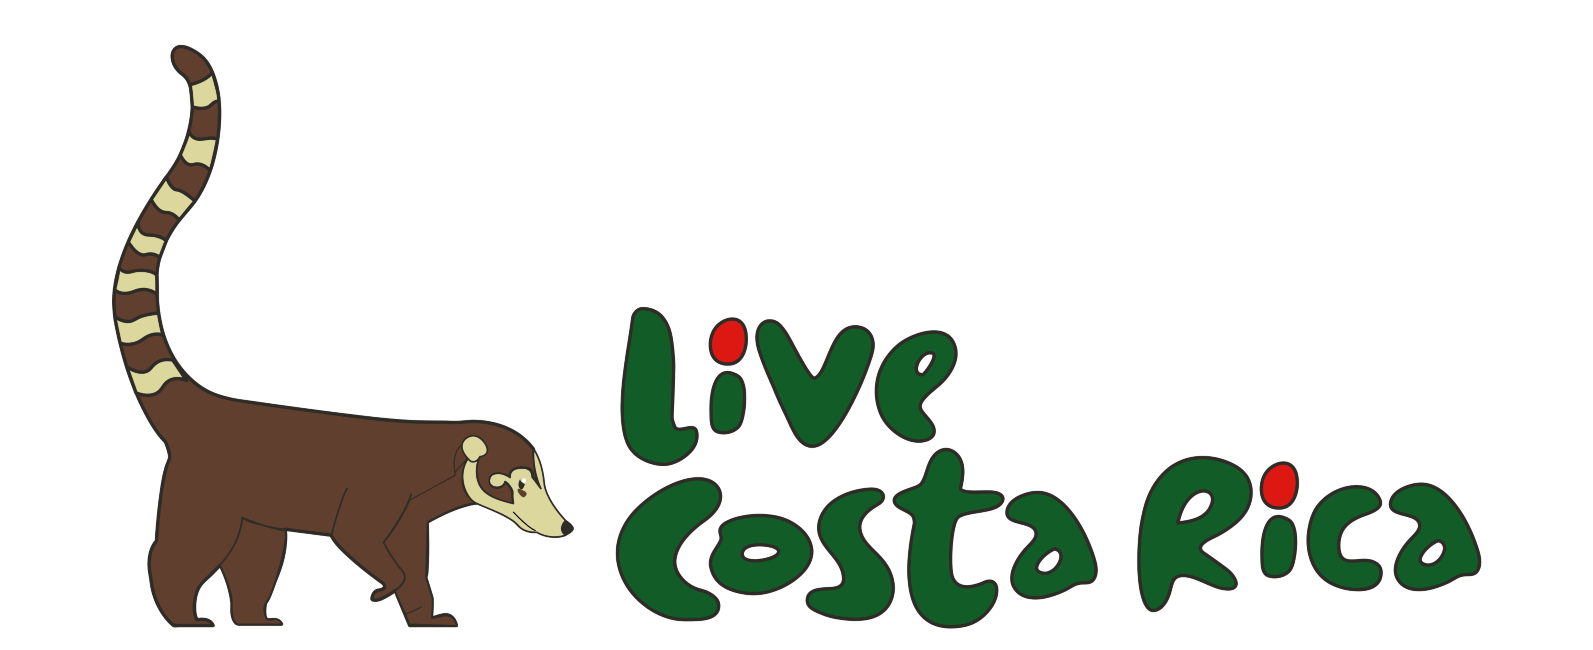 Live Costa Rica Travel |   Travel insurance